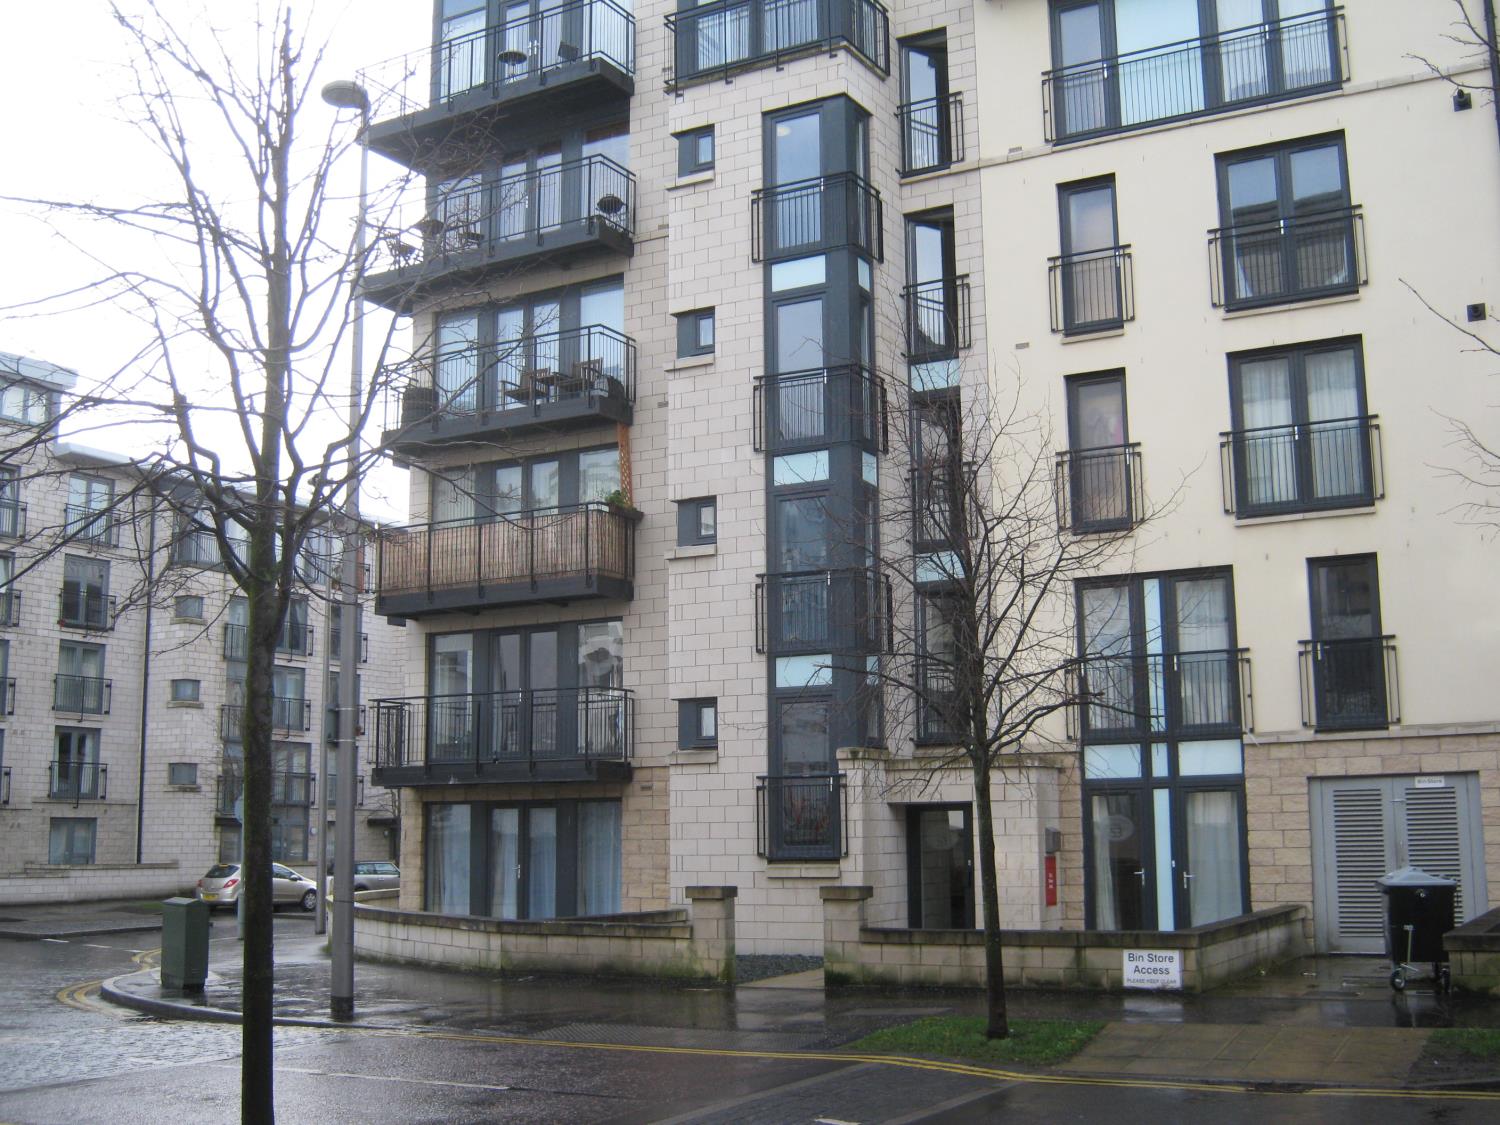 View property for rent Waterfront Park, Edinburgh